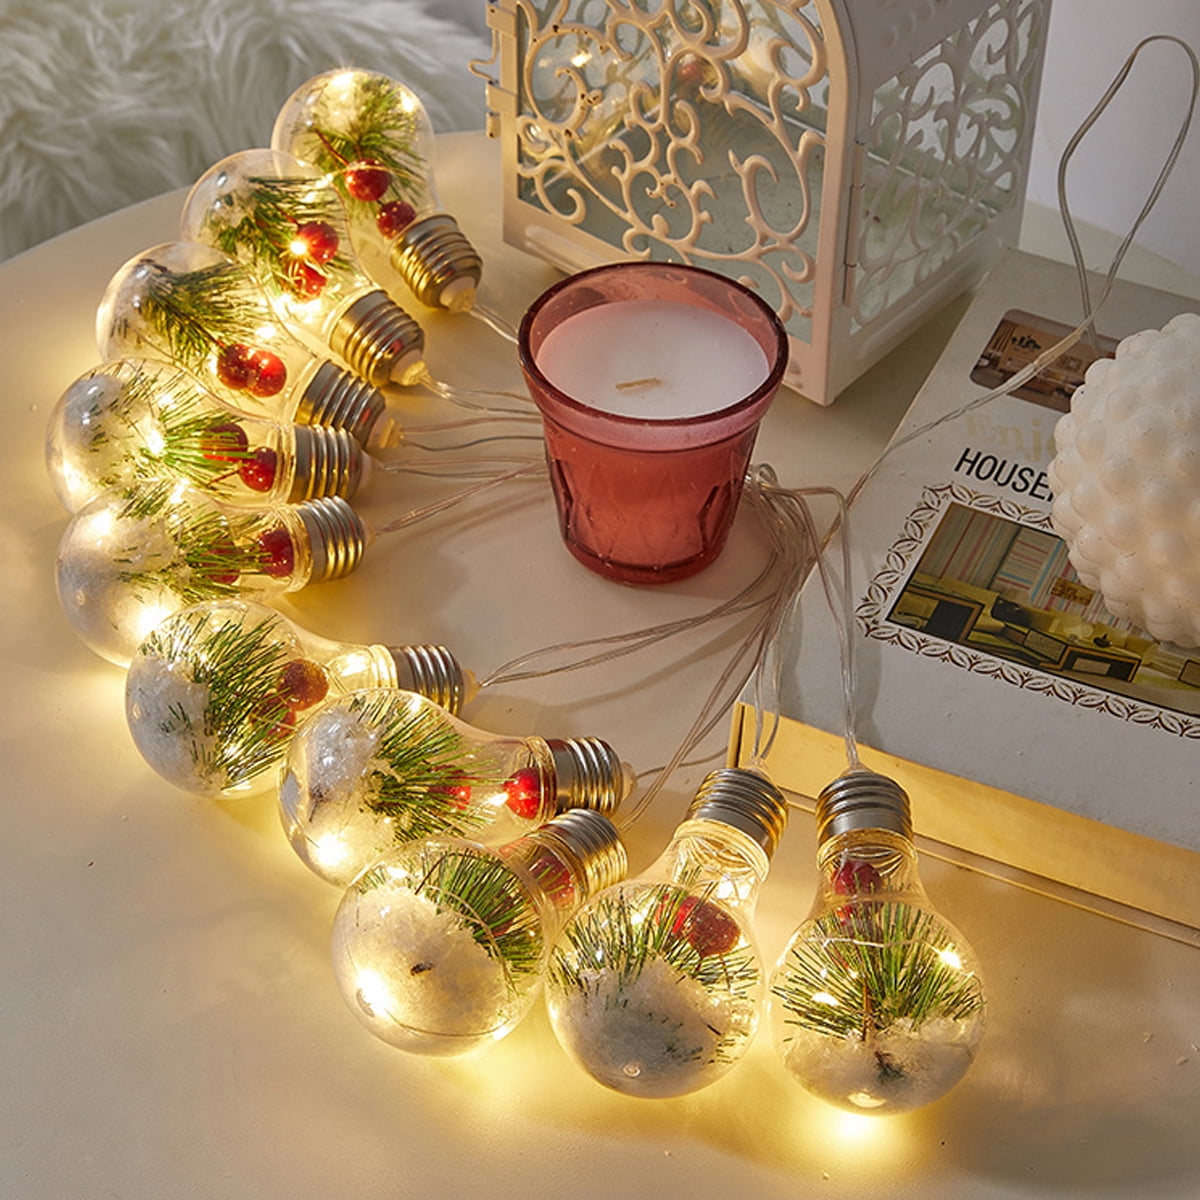 10 LED Christmas Wedding Xmas Outdoor Fairy String Light Lamp Party Home Decor 